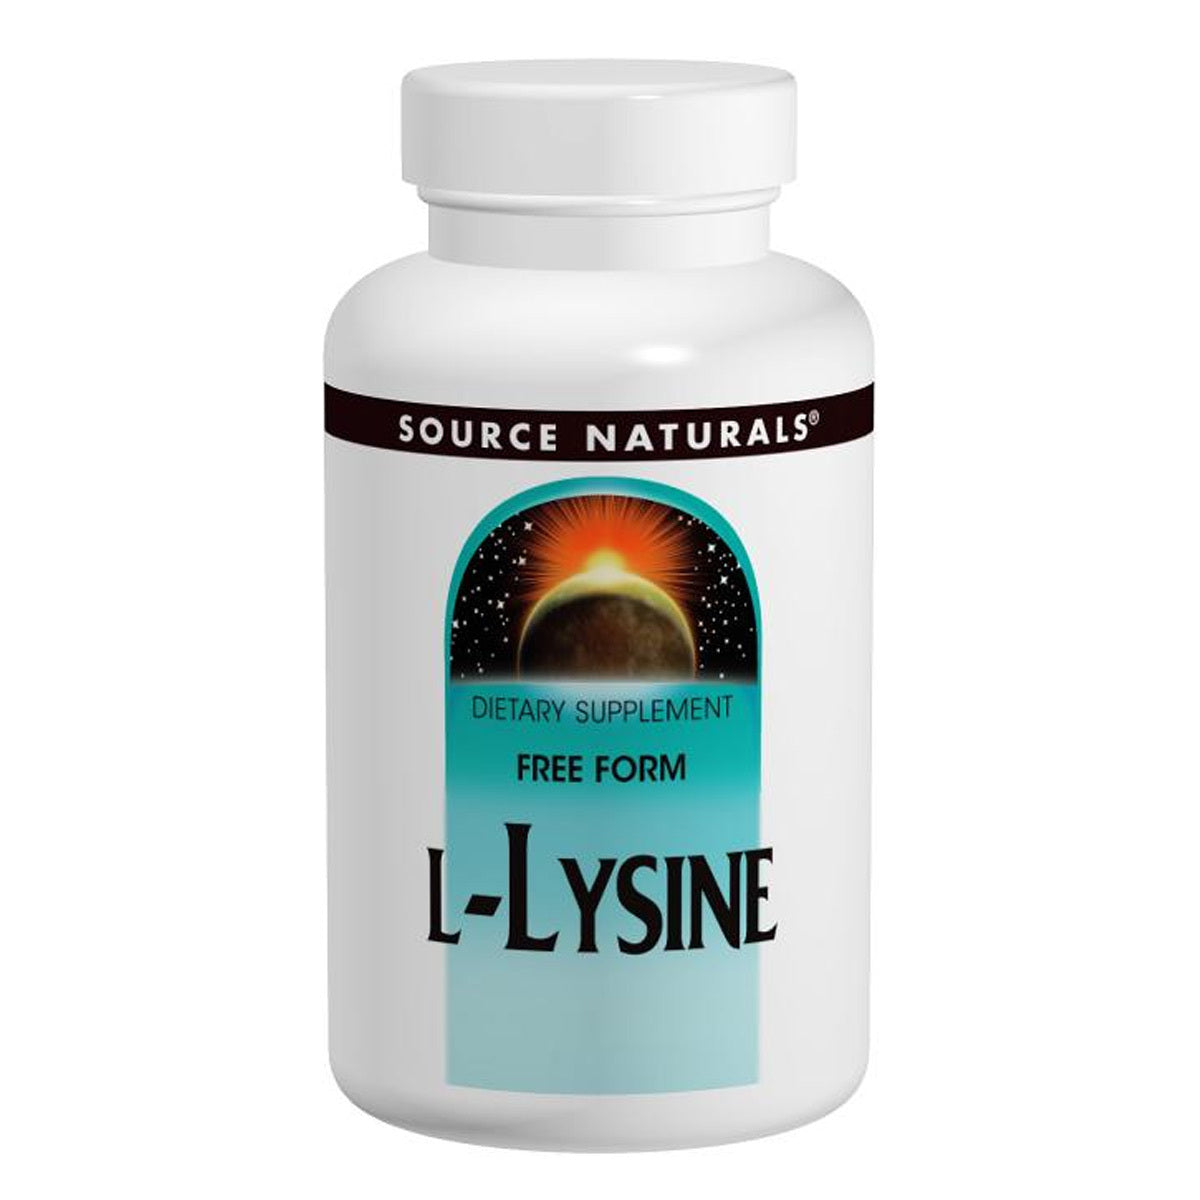 Primary image of L-Lysine 500mg Capsules